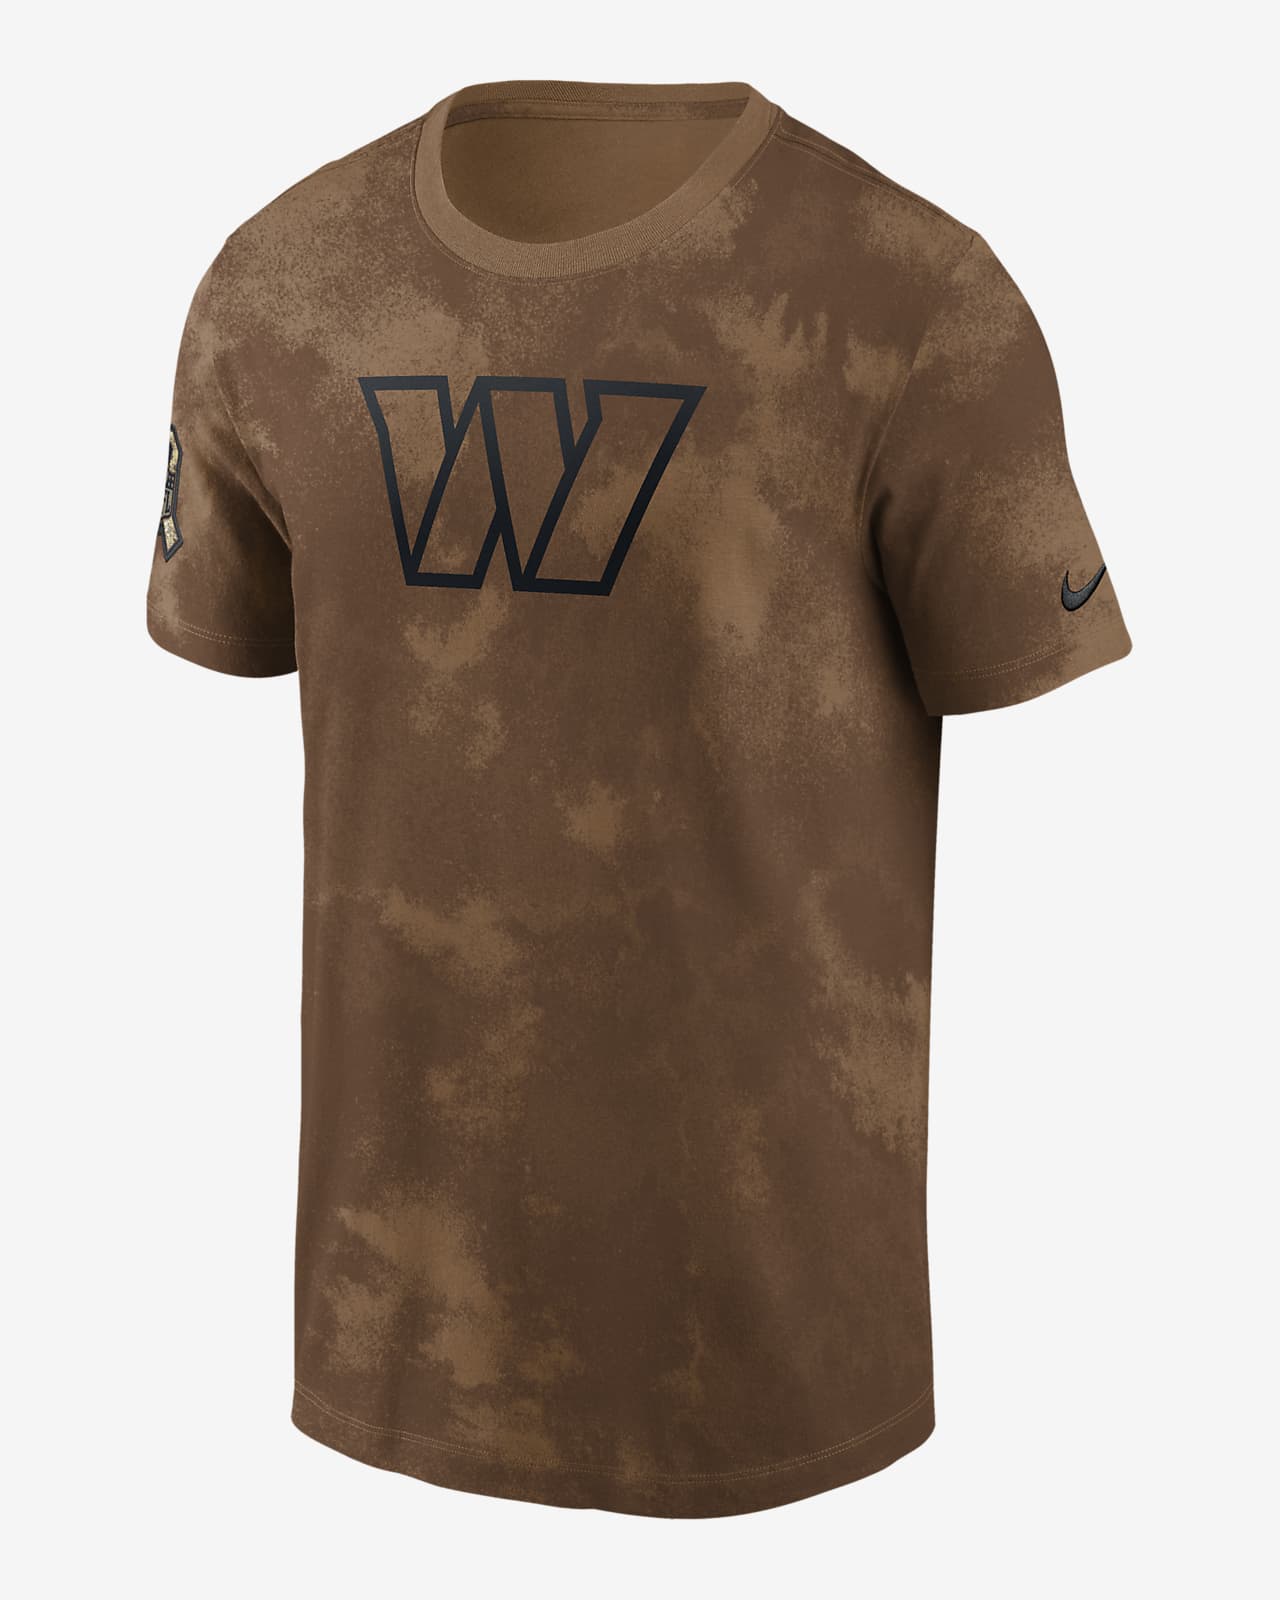 Washington Commanders Salute to Service Sideline Men's Nike NFL T-Shirt